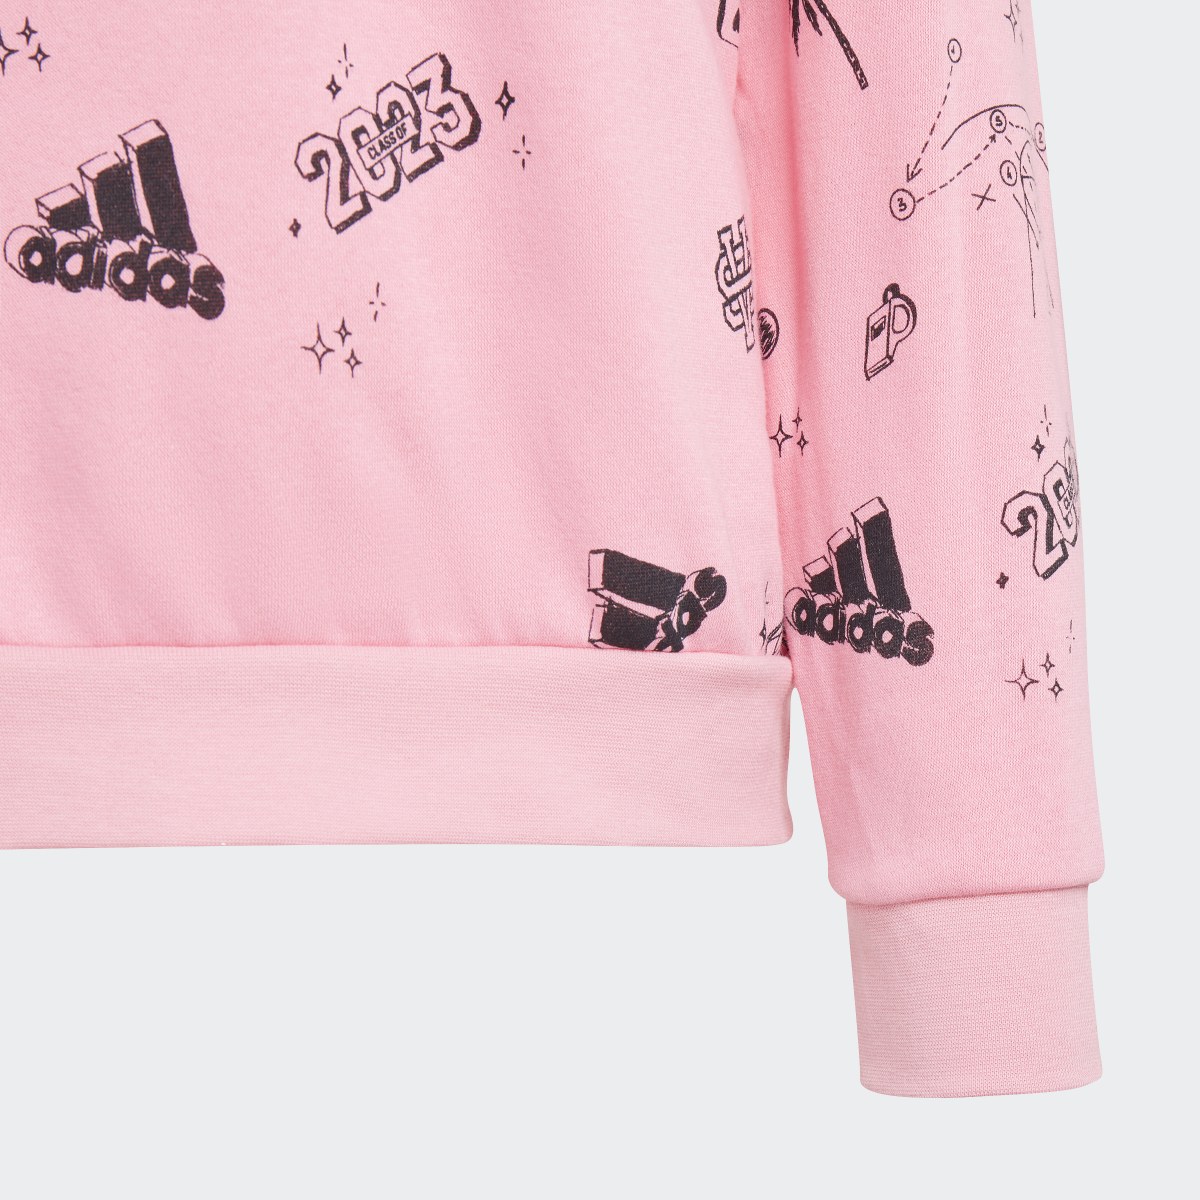 Adidas Brand Love Allover Print Crew Sweatshirt Kids. 5